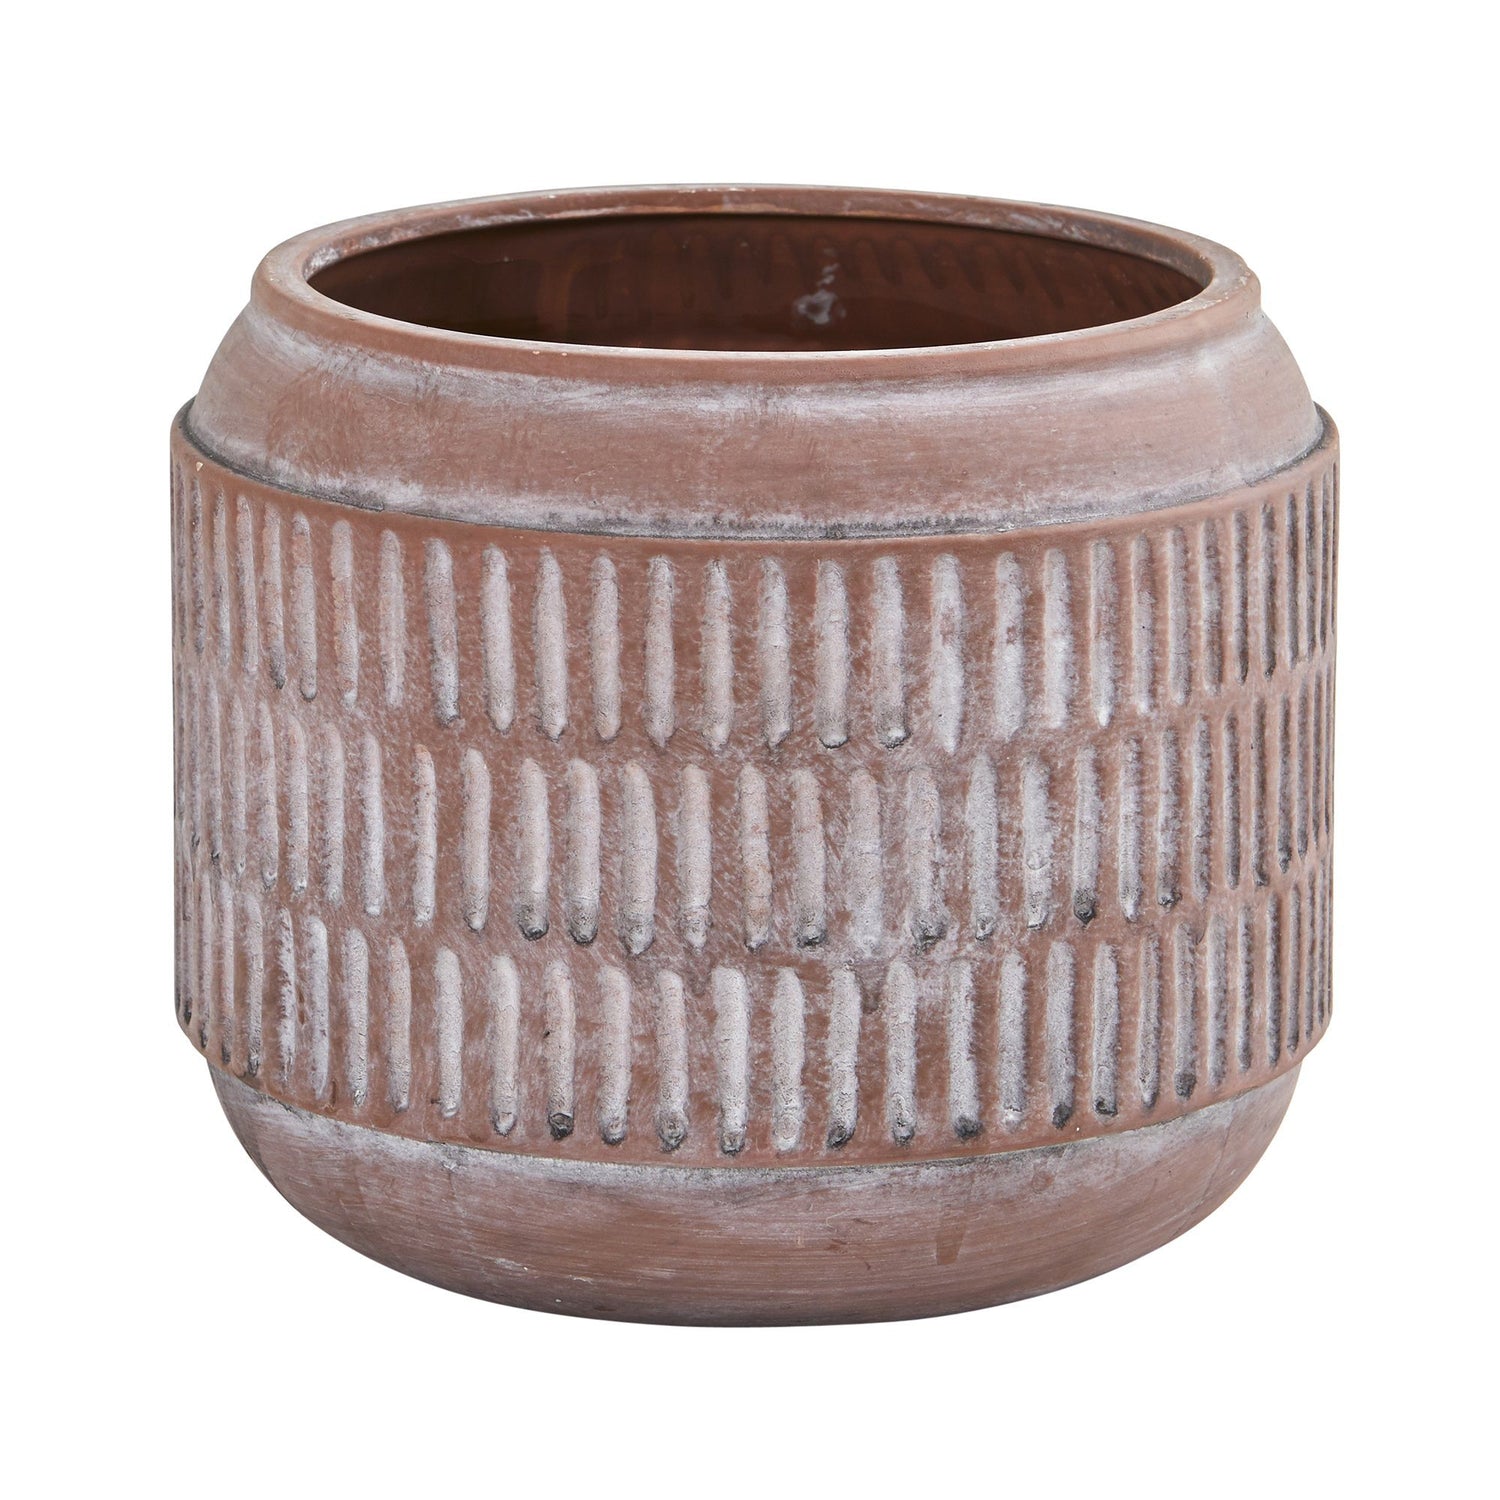 8” Boho Chic Ceramic Embossed Planter